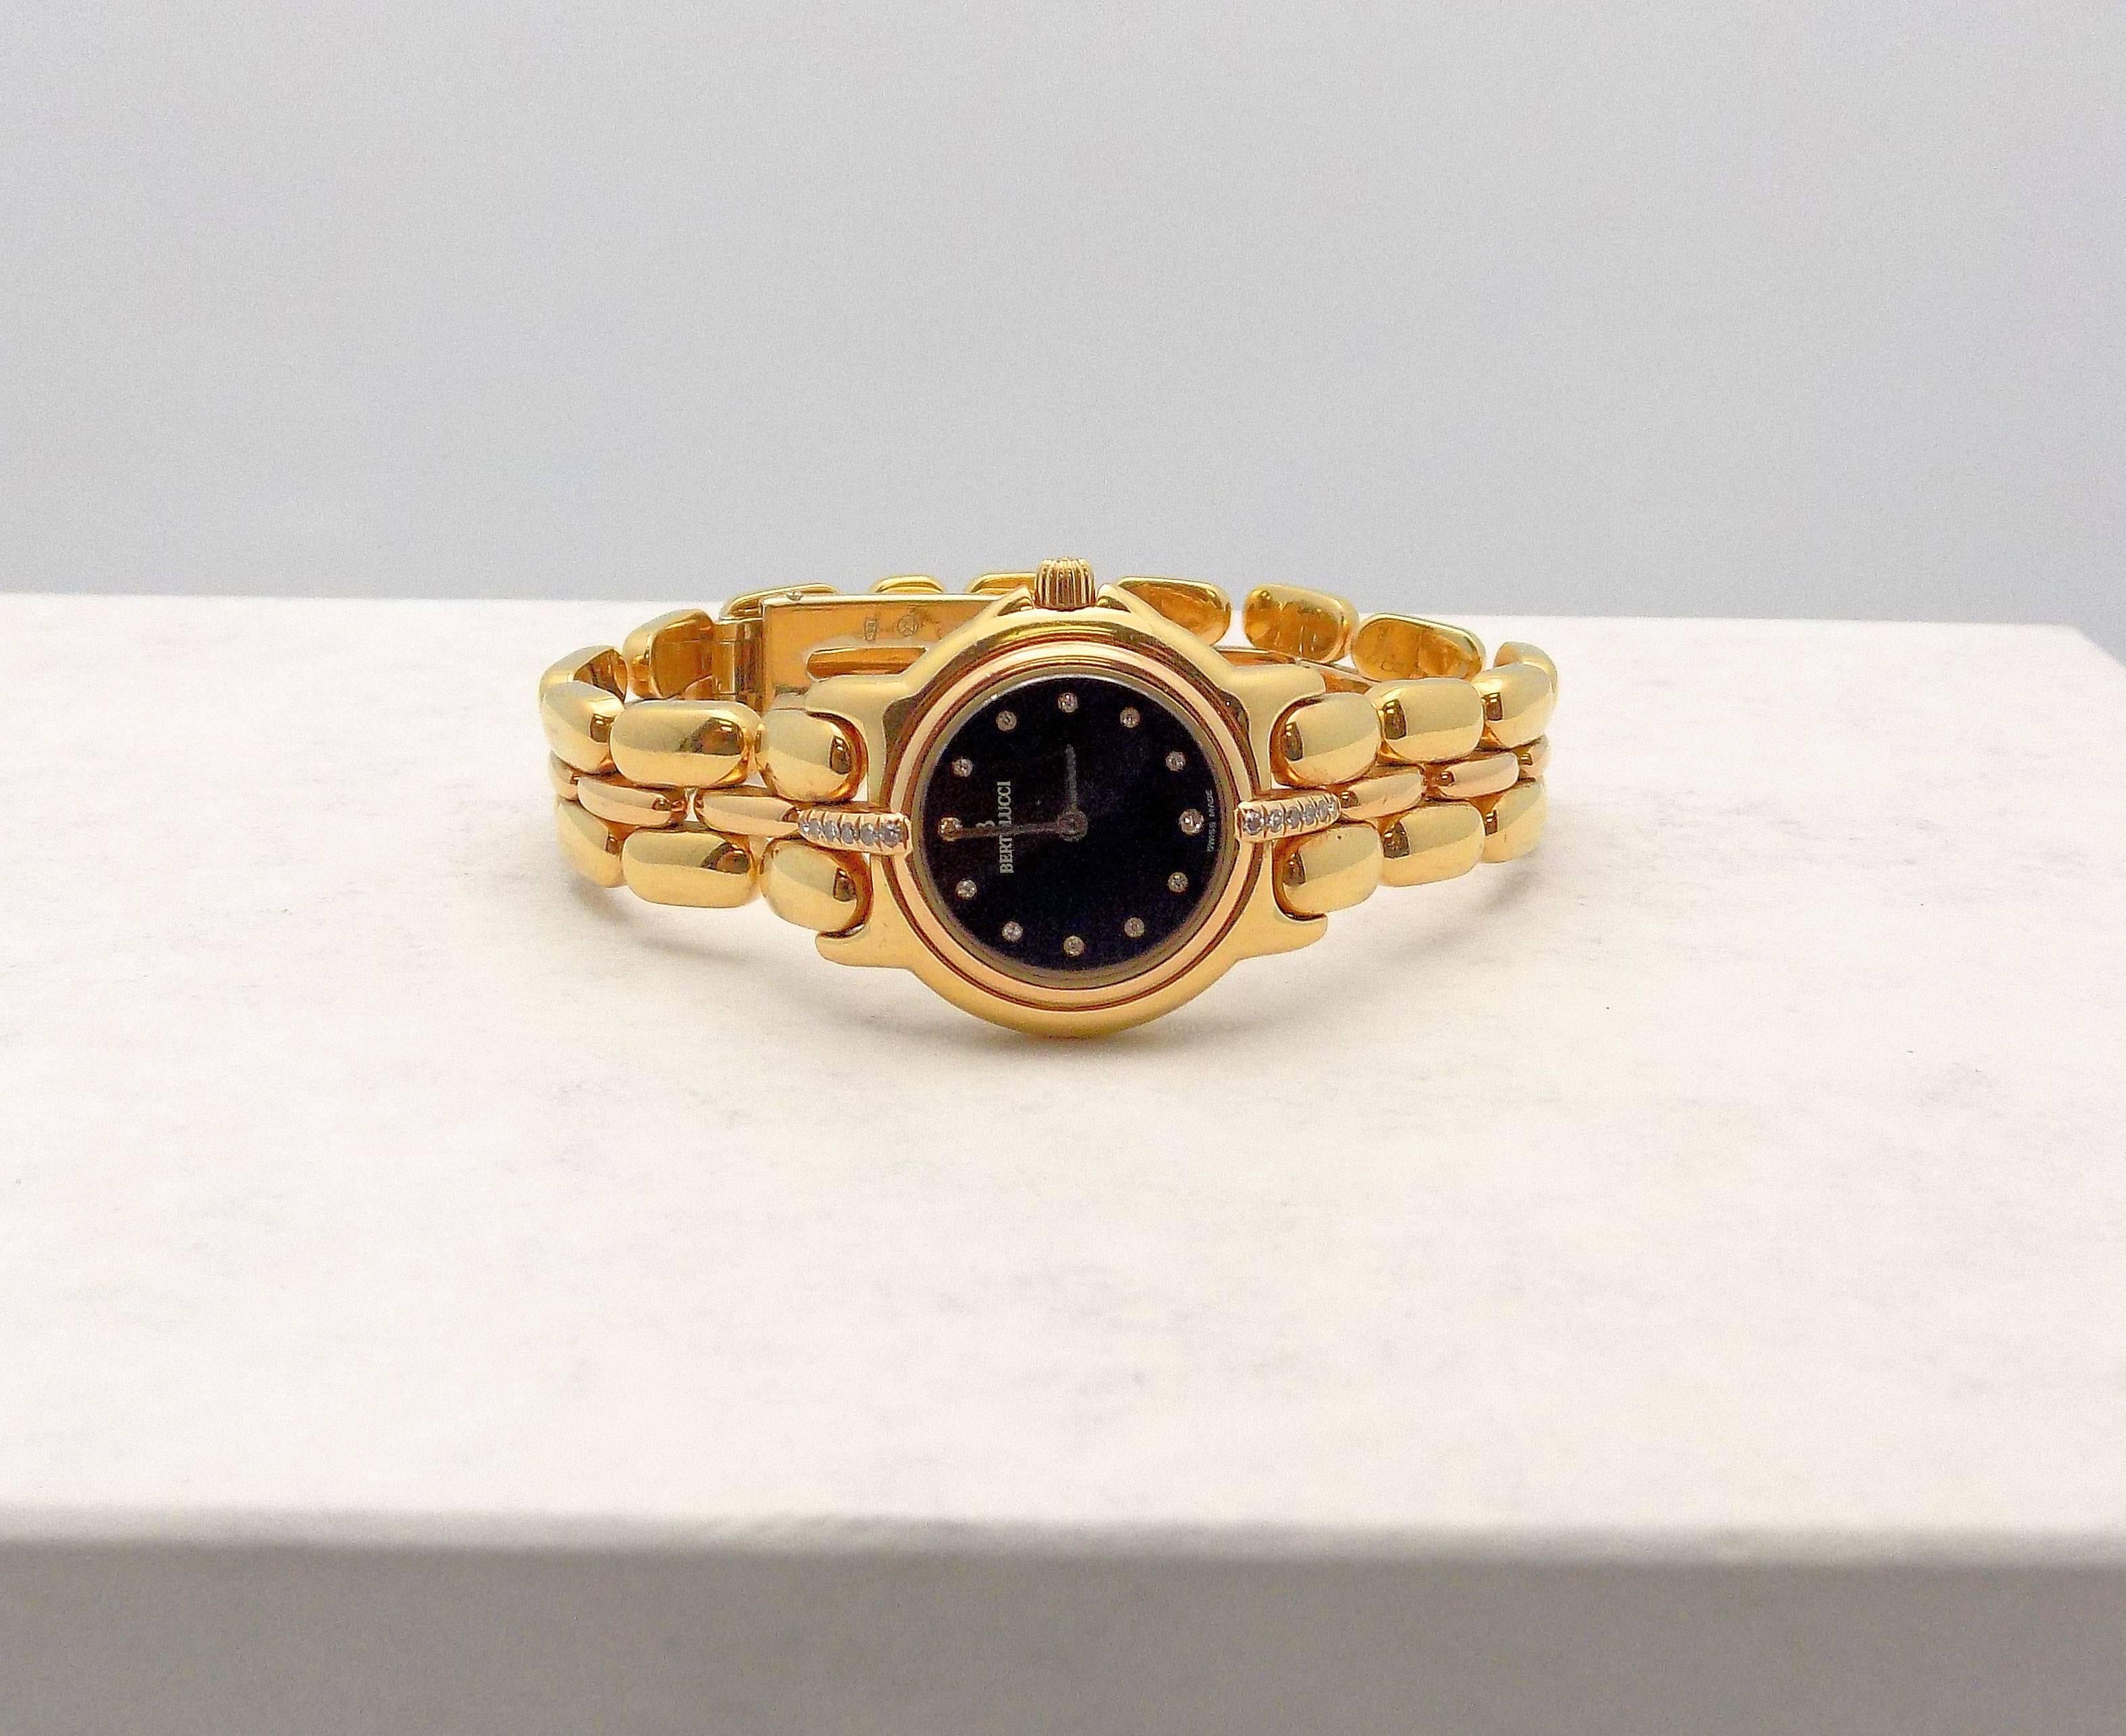 Elegant 18 Karat Yellow Gold Lady's Bertolucci Pulchra Wristwatch Featuring 12 Round Brilliant Diamonds 0.12 Carat Total Weight VVS-2, G; Signed: Bertolucci; 51.2 DWT Gross Weight or 79.63 Grams.